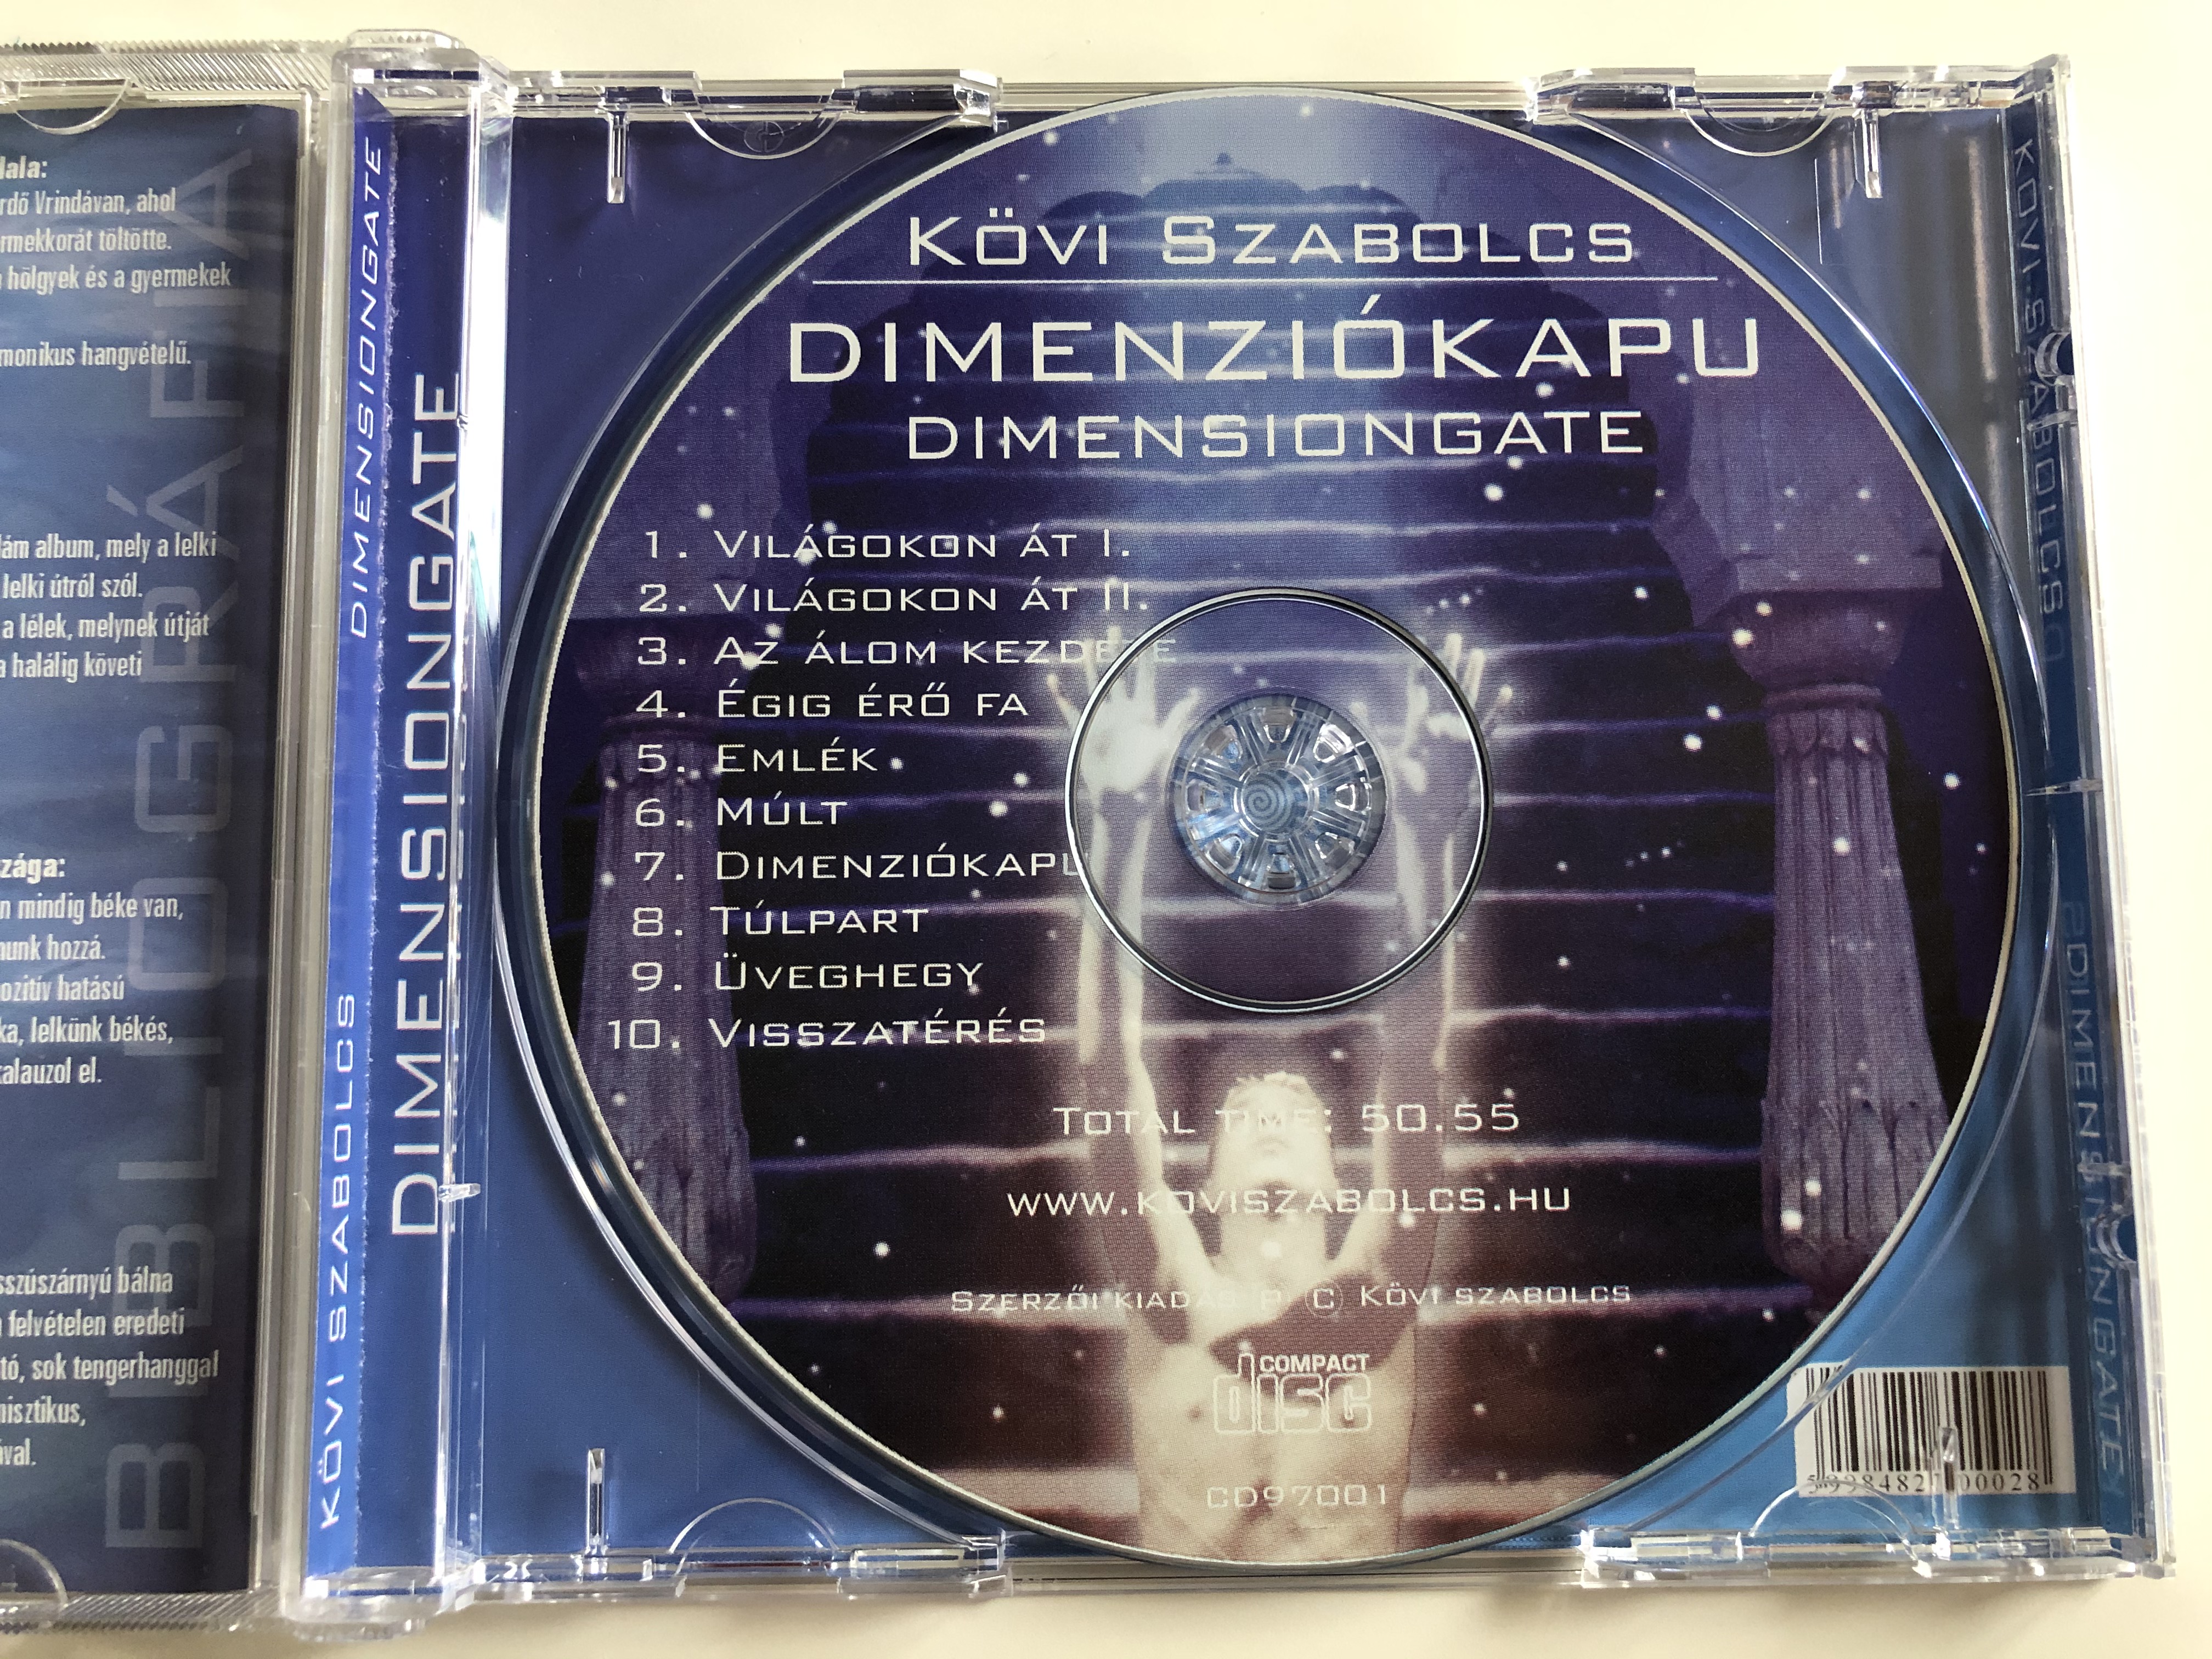 k-vi-szabolcs-dimenzi-kapu-audio-cd-1999-cd97001-2-.jpg